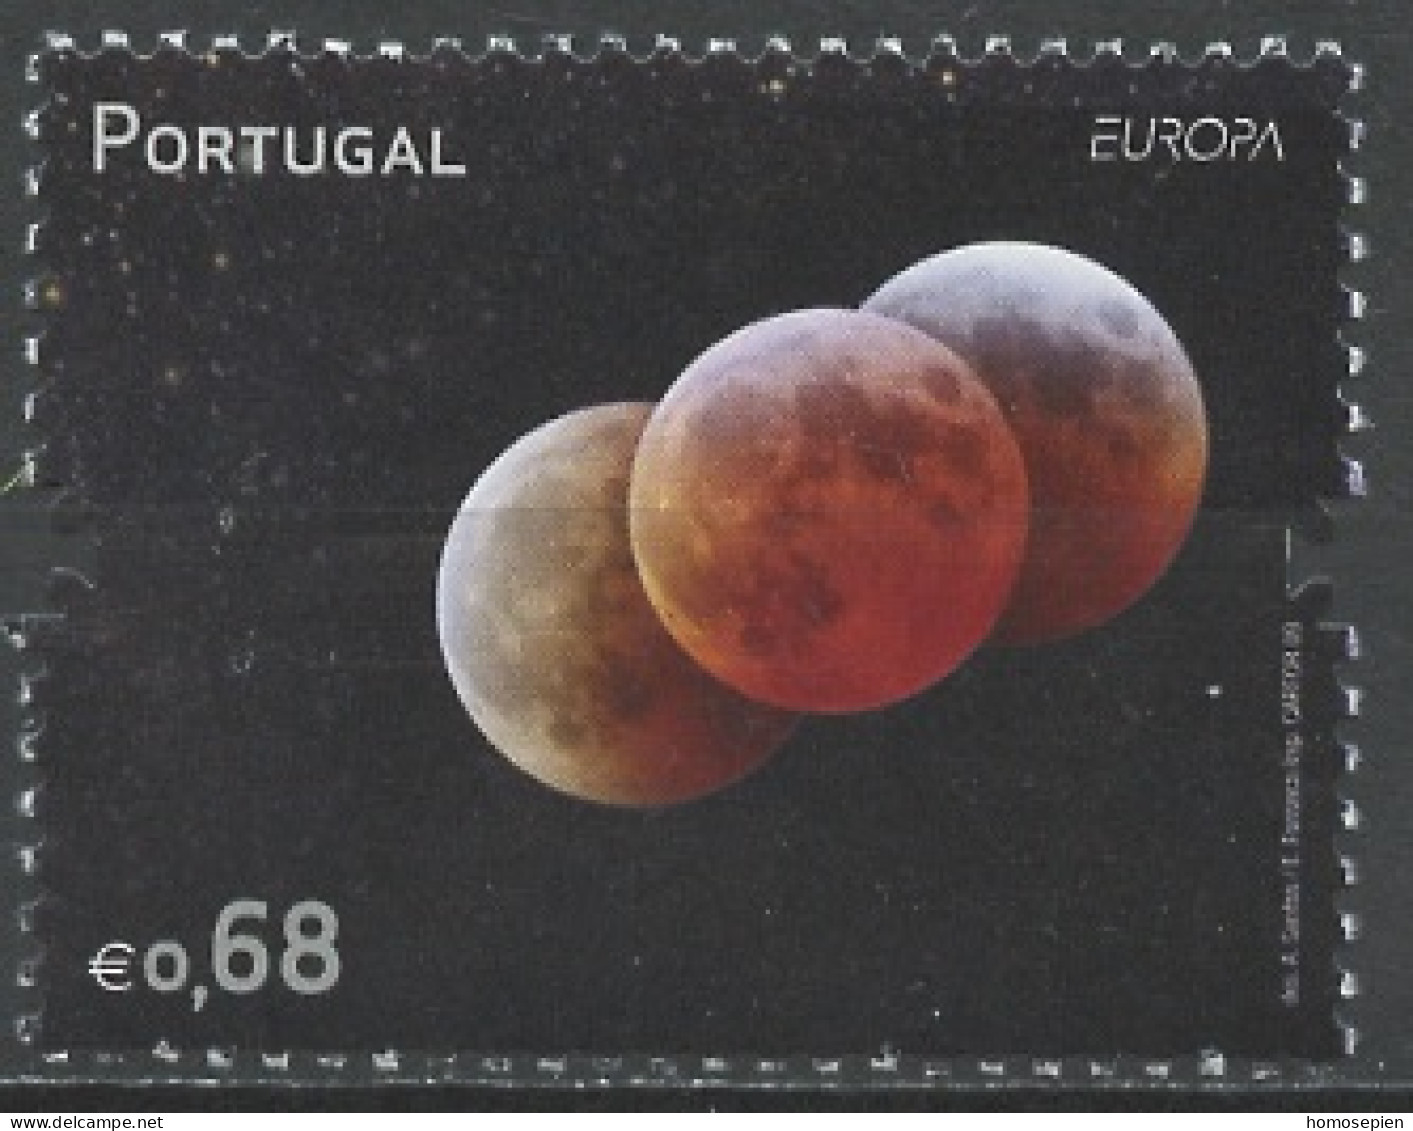 Portugal 2009 Y&T N°3386 - Michel N°3407I *** - 0,68€ EUROPA - Used Stamps